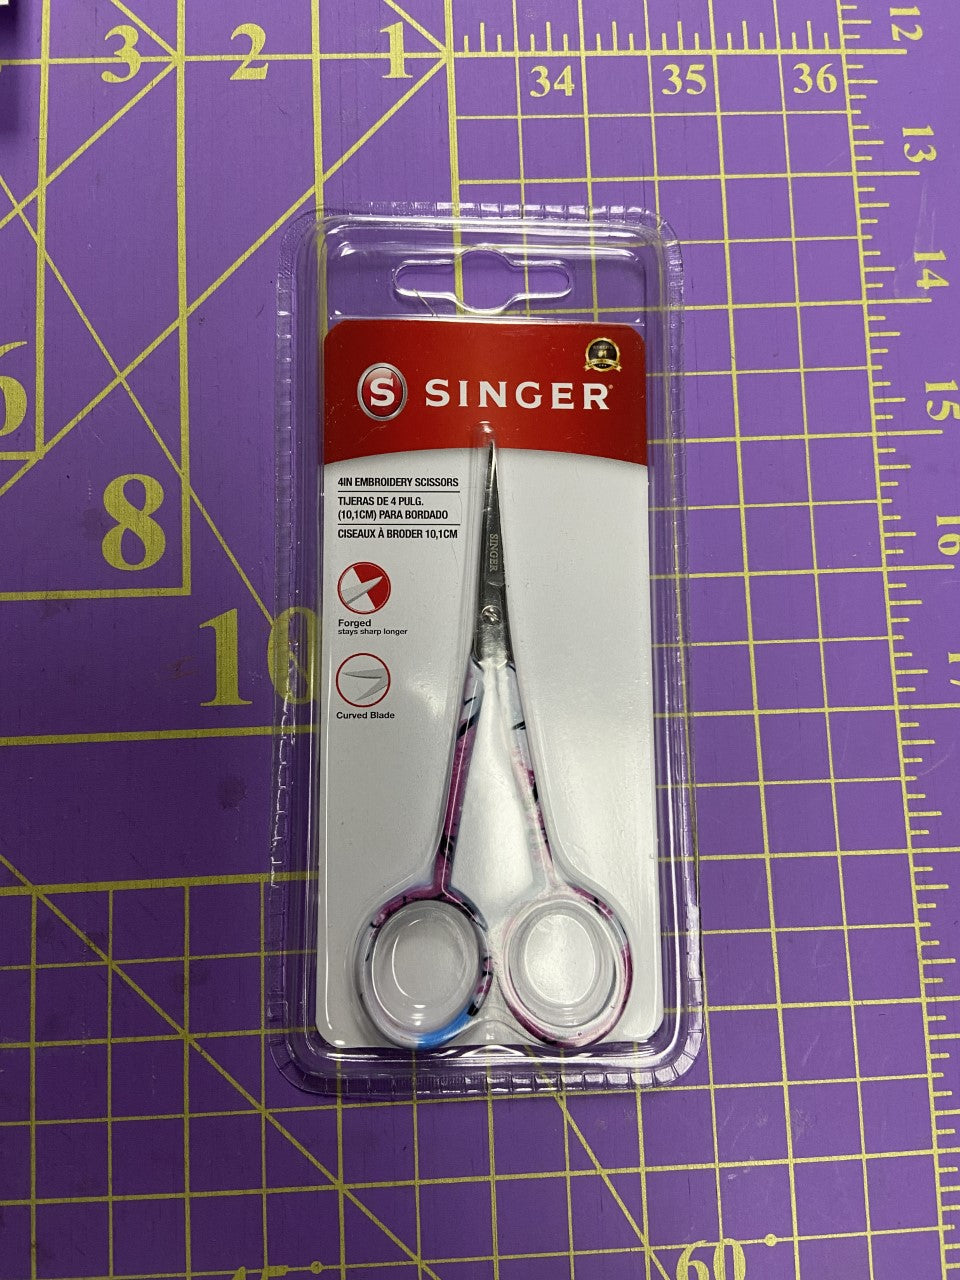 Singer 4" Embroidery Scissors